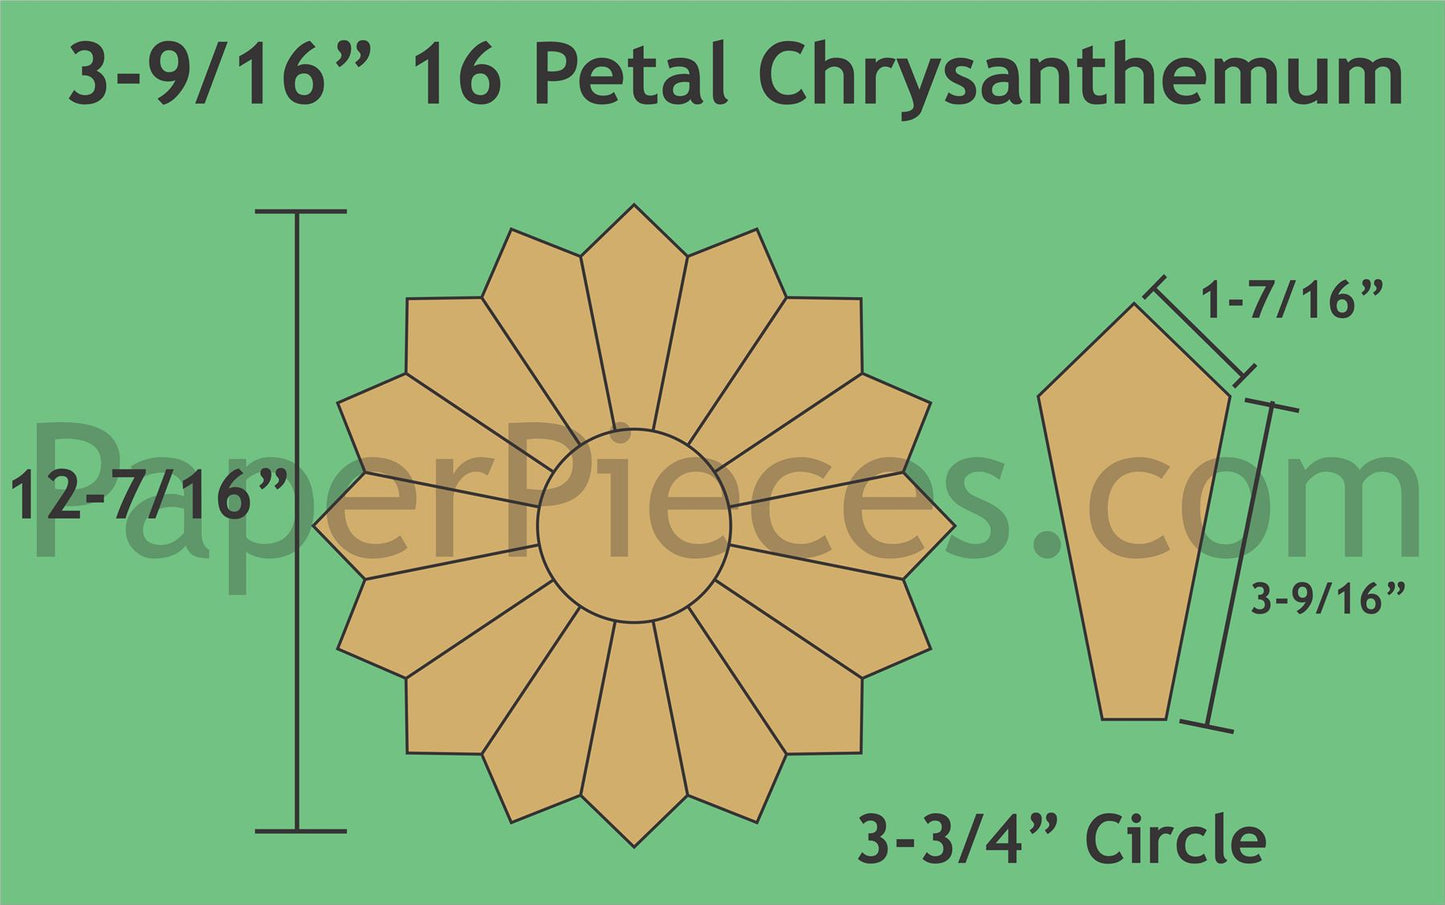 3-9/16" 16 Petal Chrysanthemums